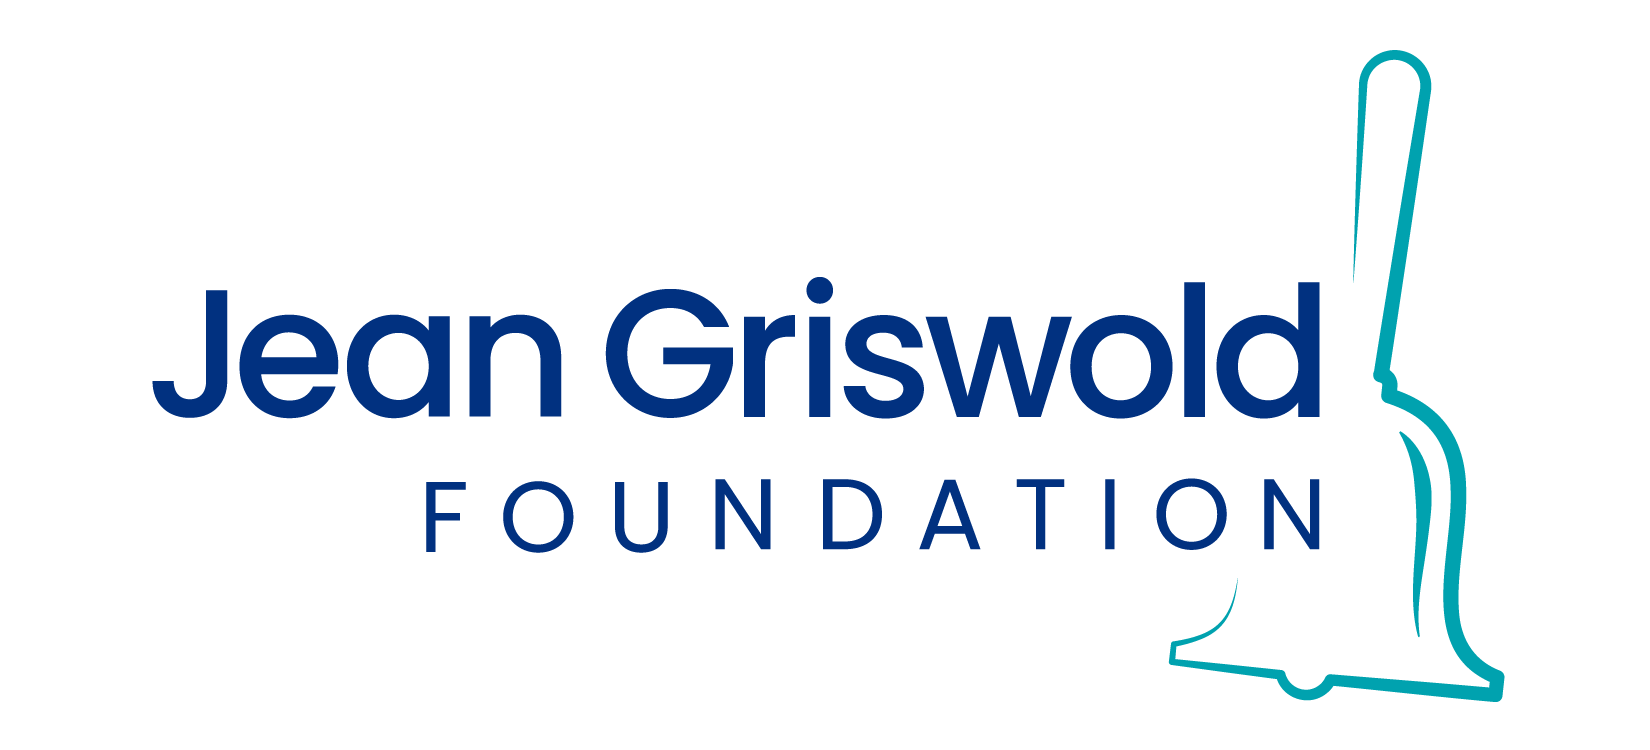 Jean Griswold Foundation Logo